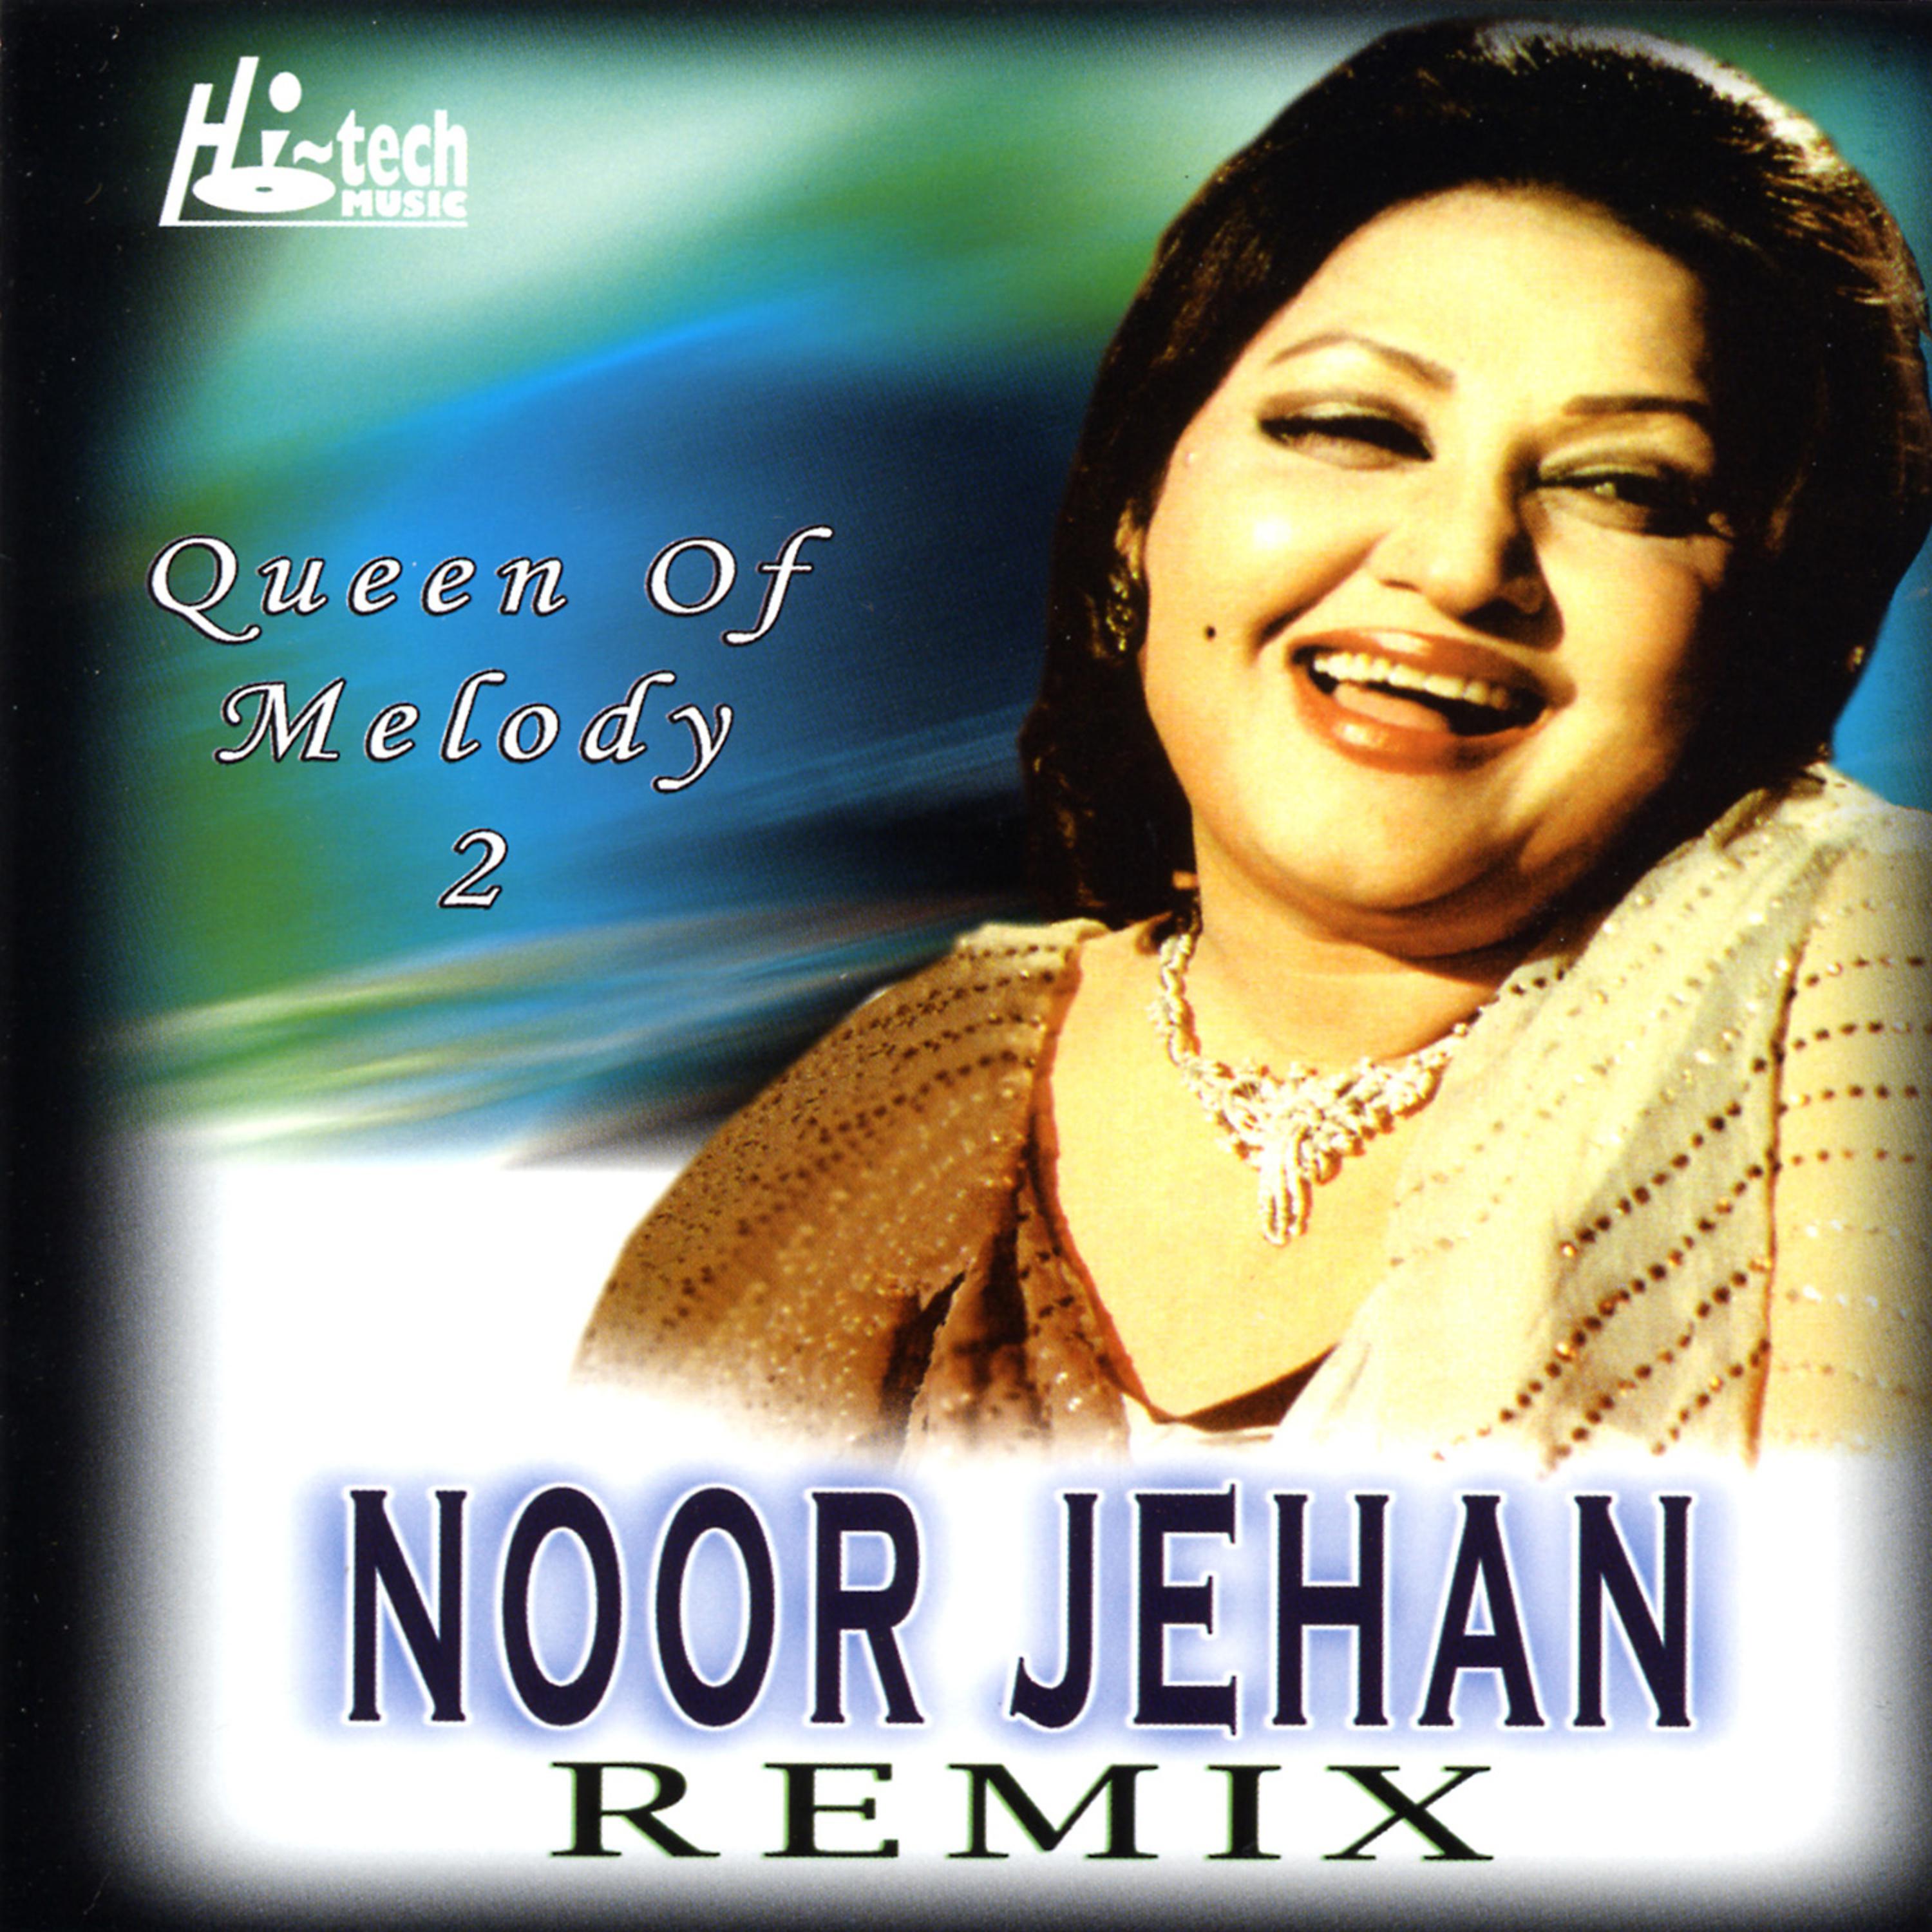 Постер альбома Noor Jehan Remix 2 (Queen of Melody)